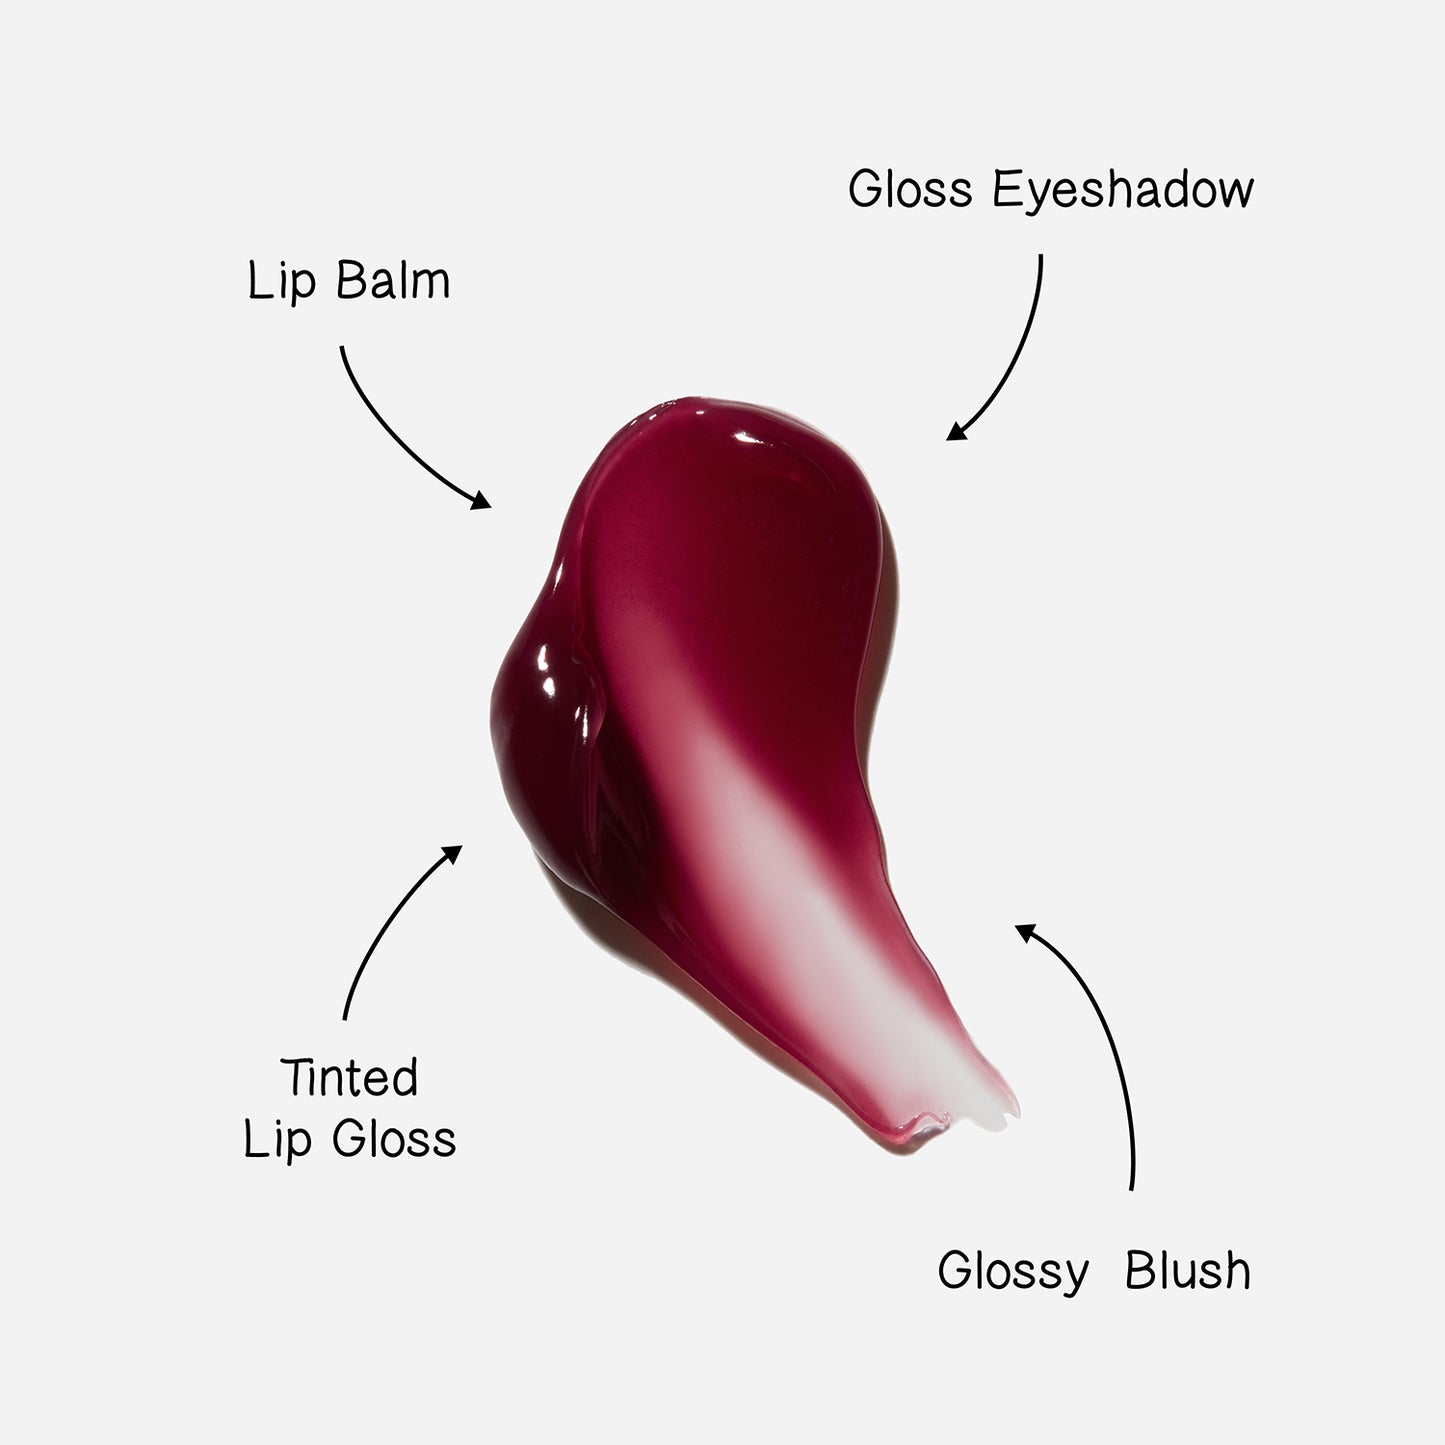 Dr.Lipp Superfood Elderberry Tint uses - lip balm, gloss eyeshadow, glossy blush, tinted lip gloss